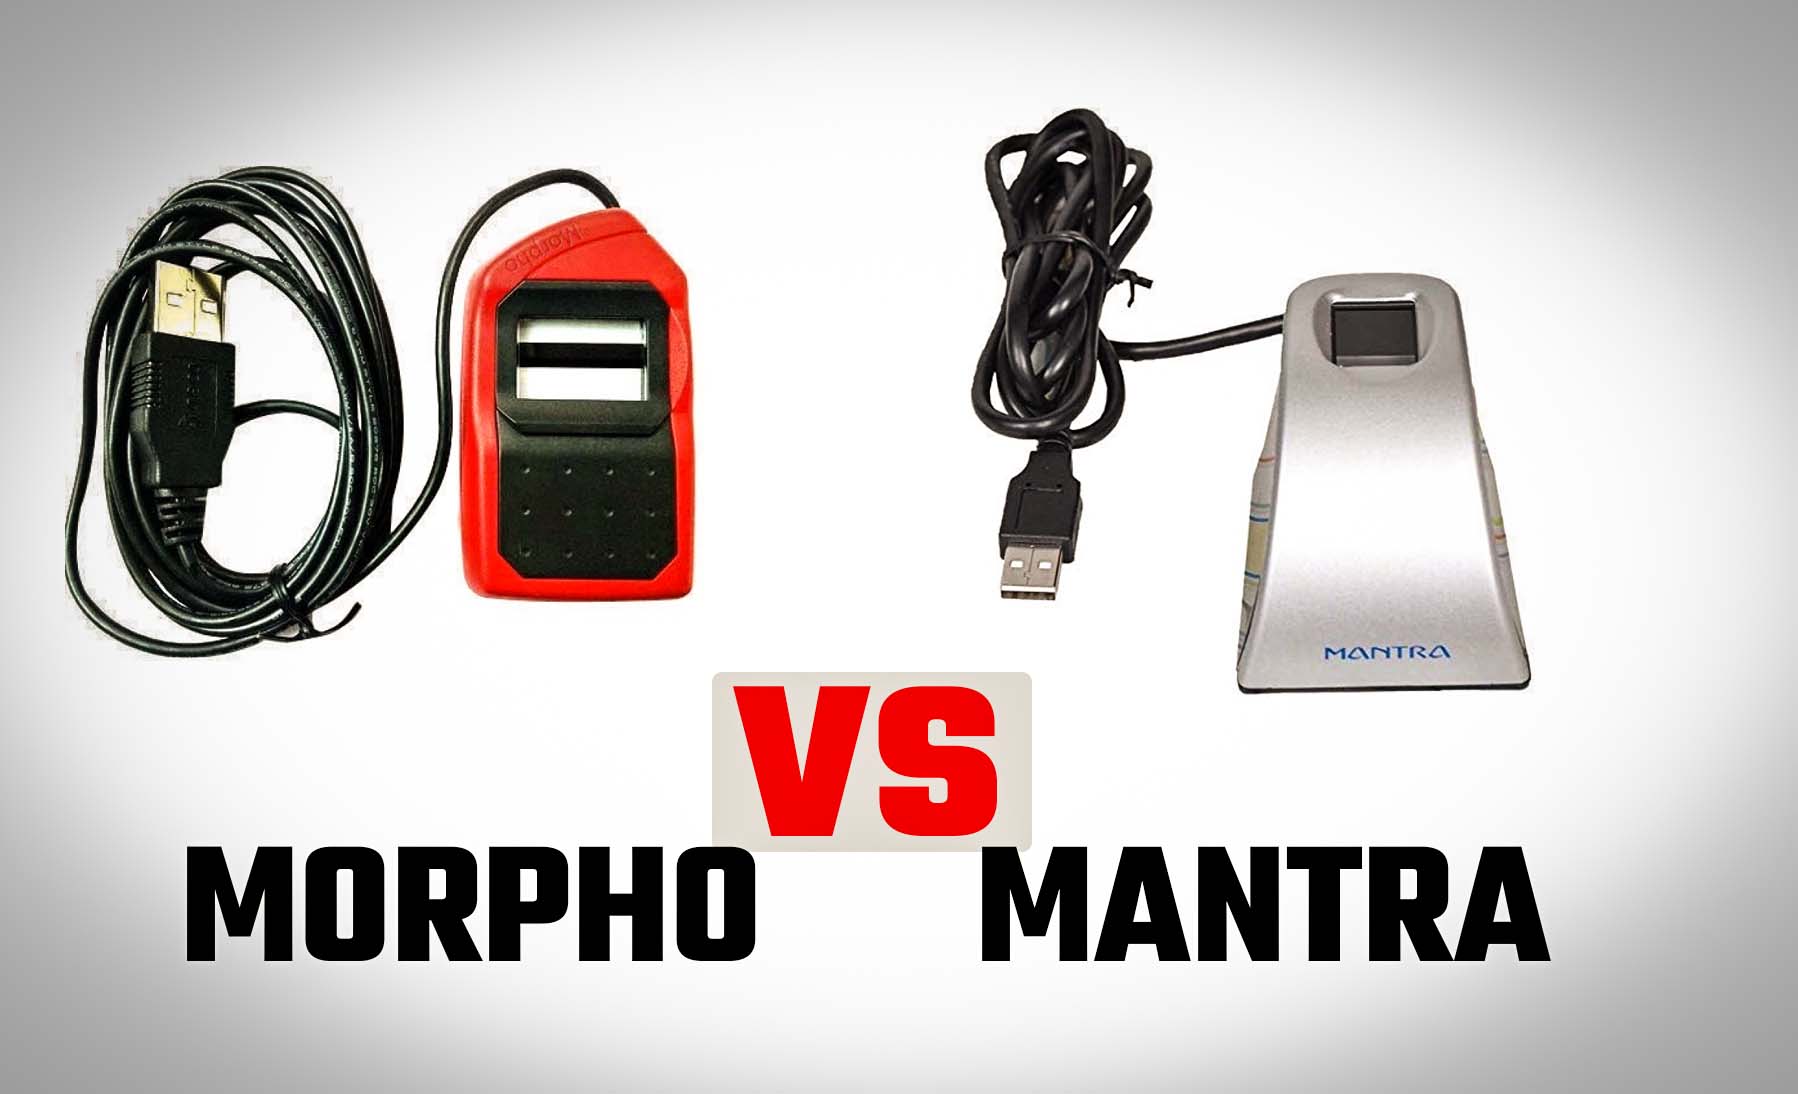 Mantra and Morpho Fingerprint Devices